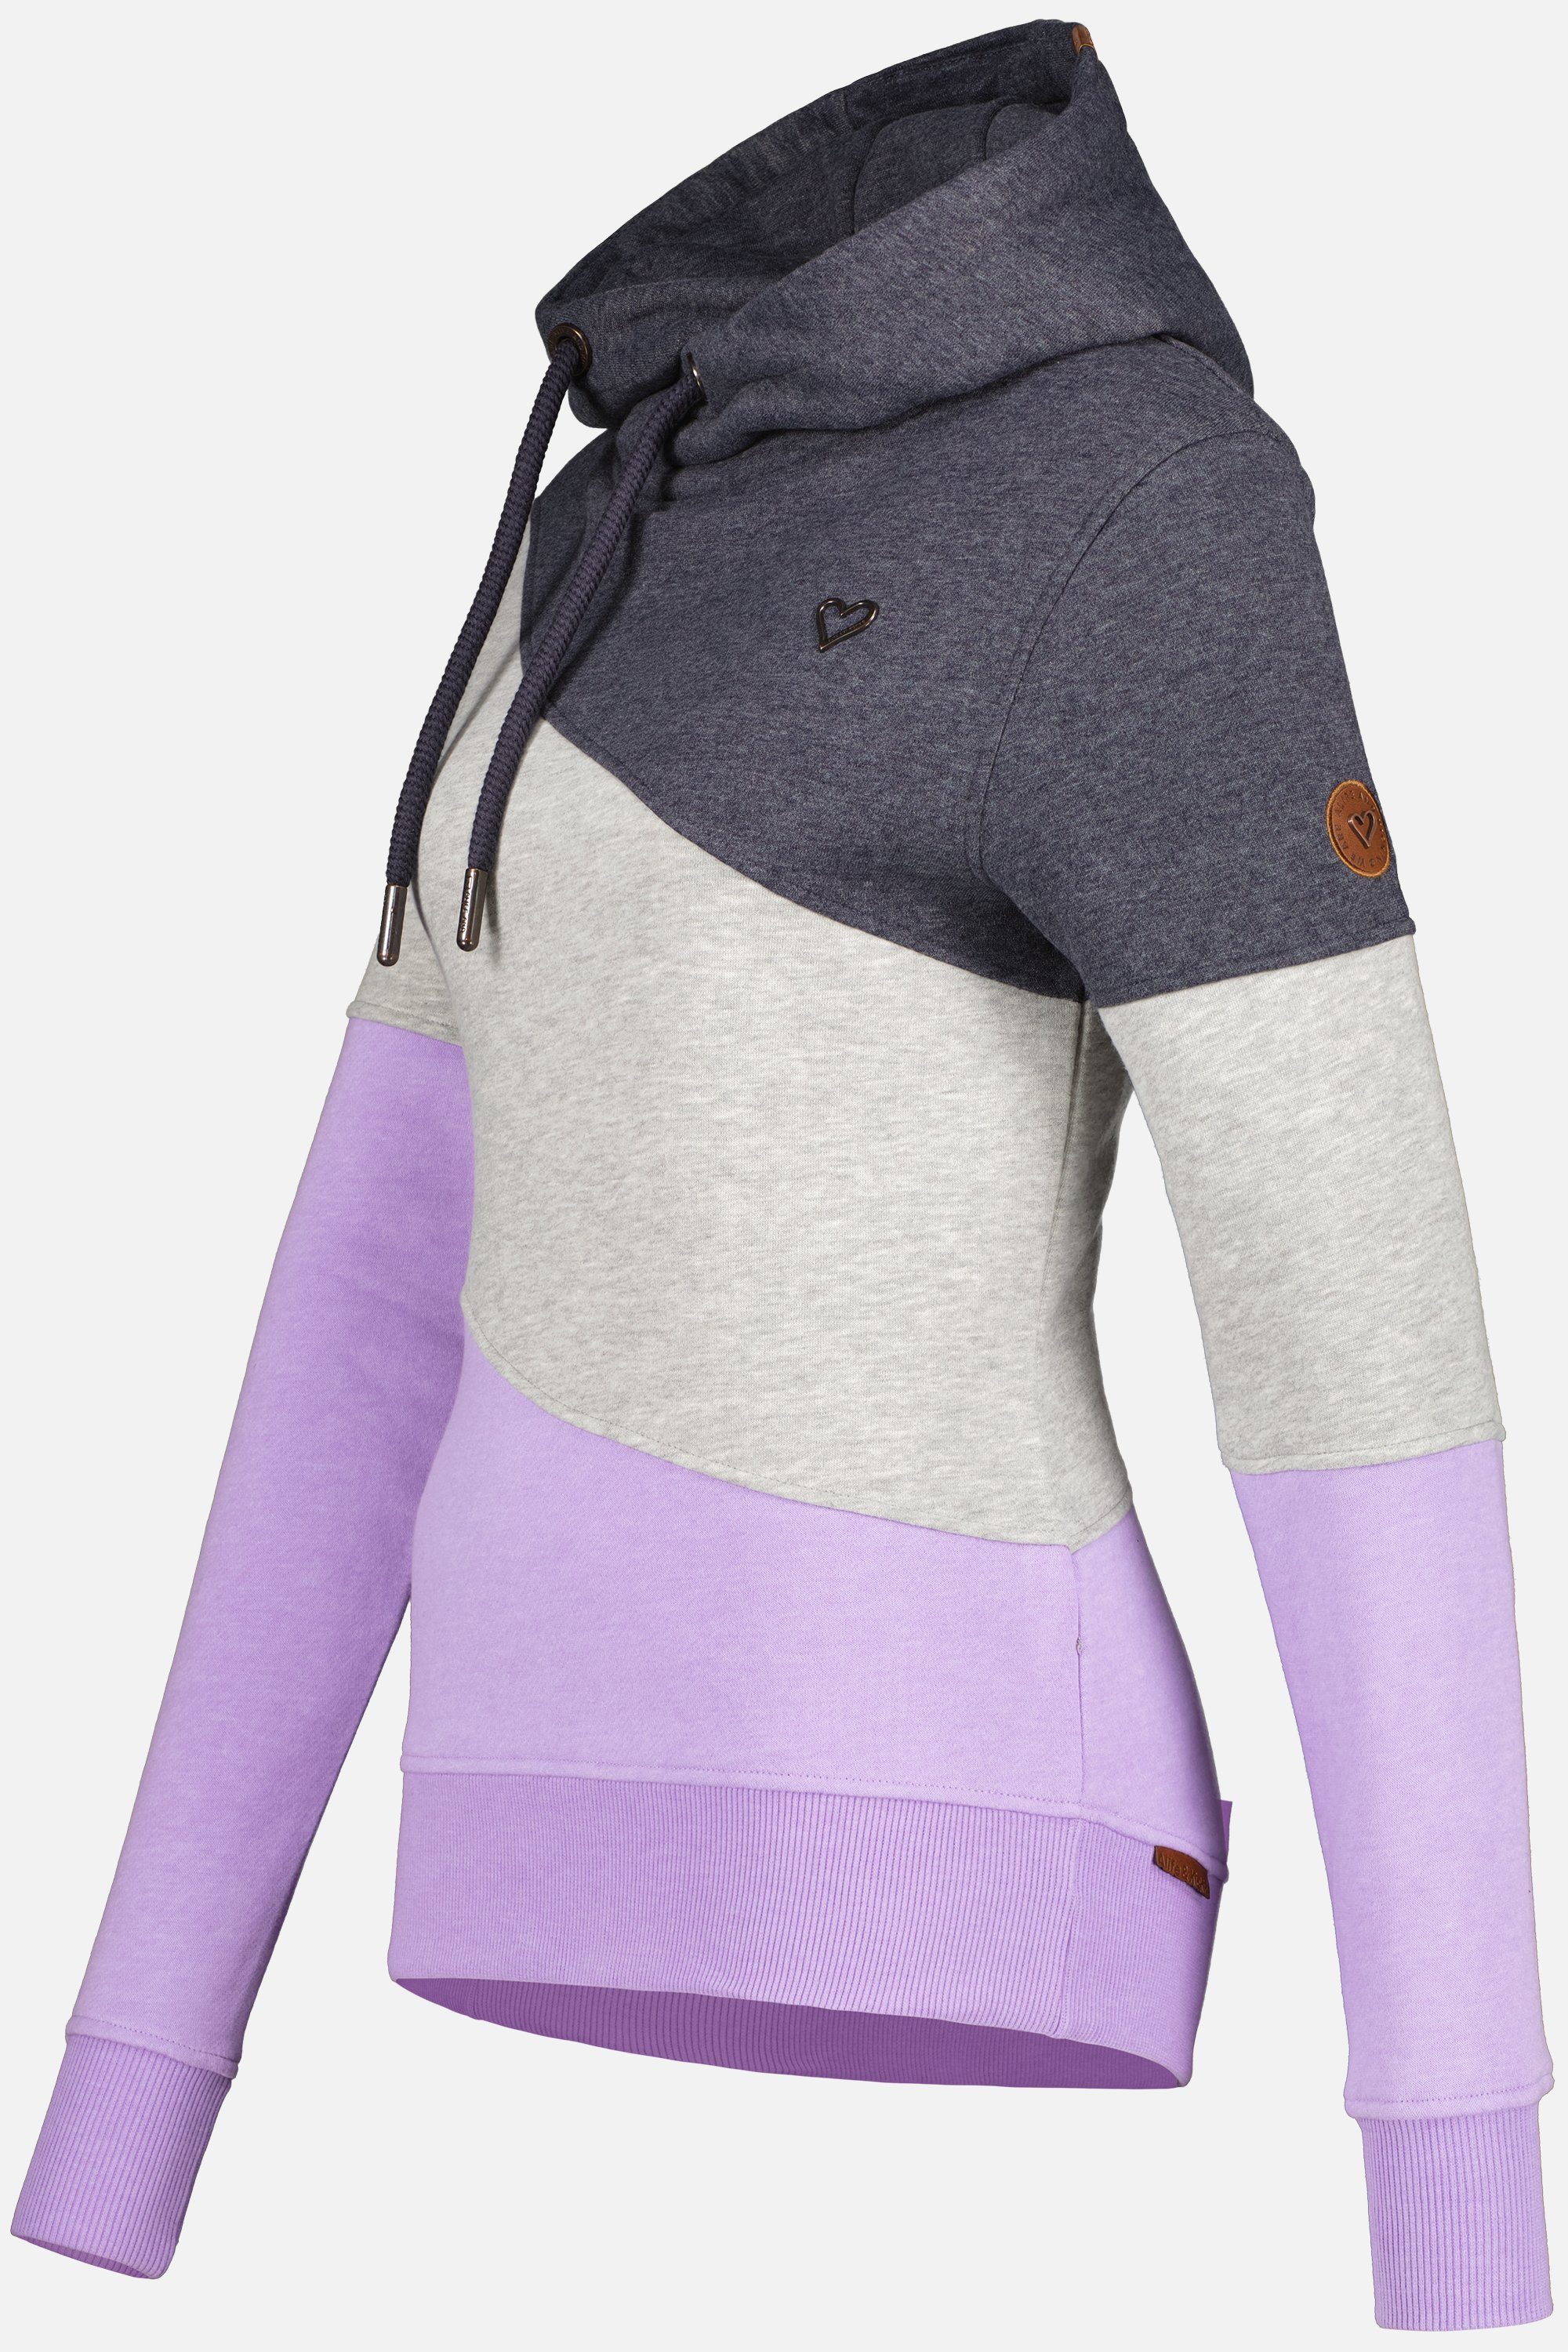 Alife & Kickin Kapuzensweatshirt, Sweatshirt Damen lavender Pullover A StacyAK Hoodie digital melange Kapuzensweatshirt